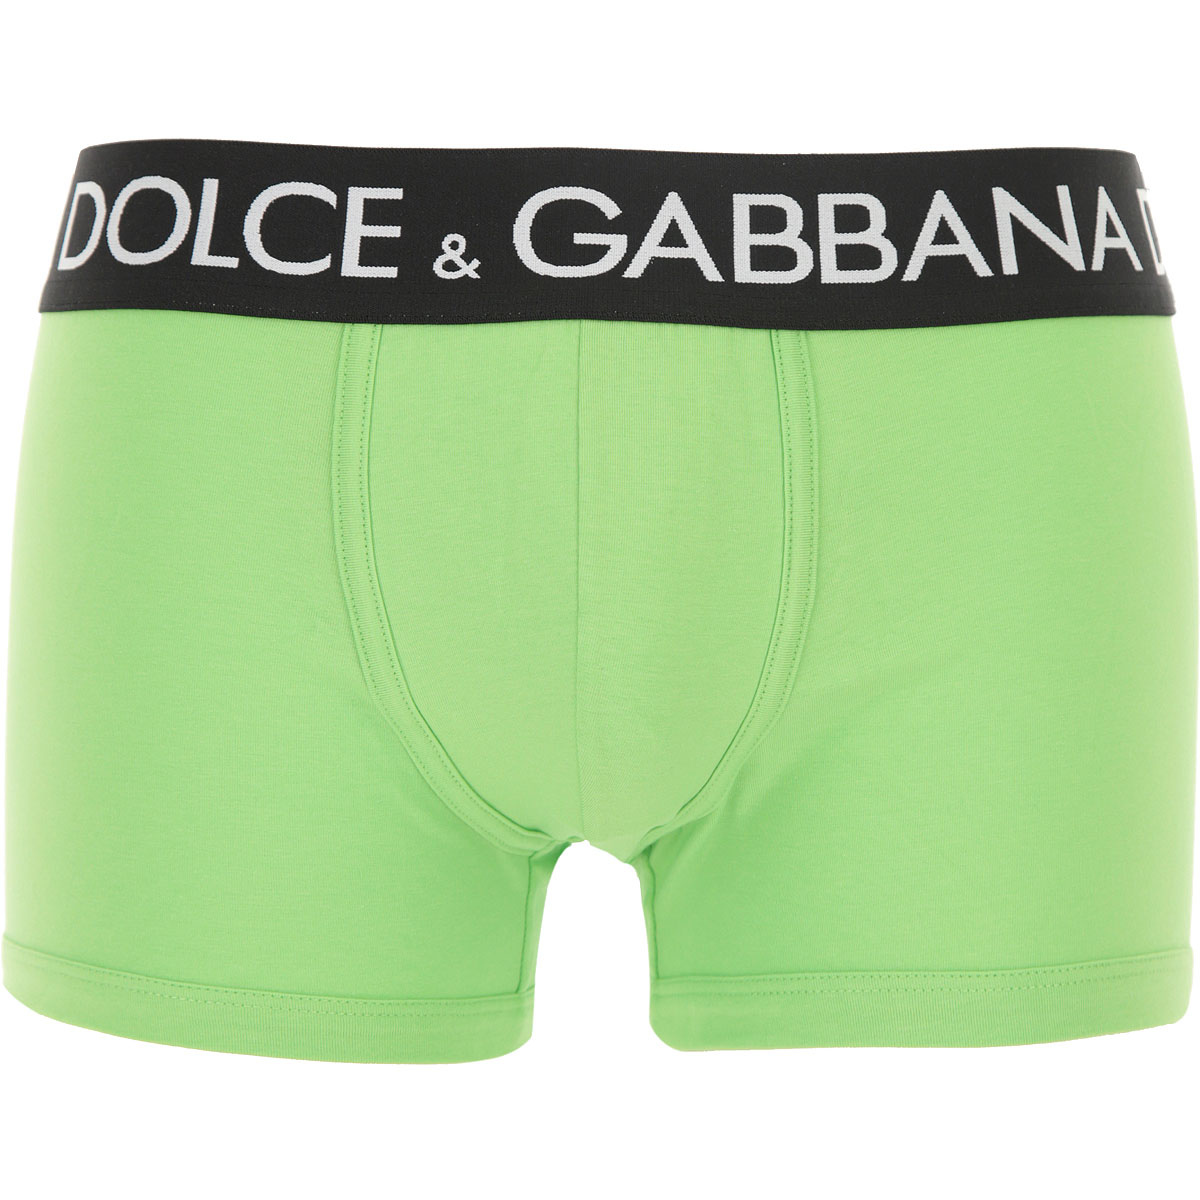 Mens Underwear Dolce & Gabbana, Style code: m4b97j-0uaig-v0336